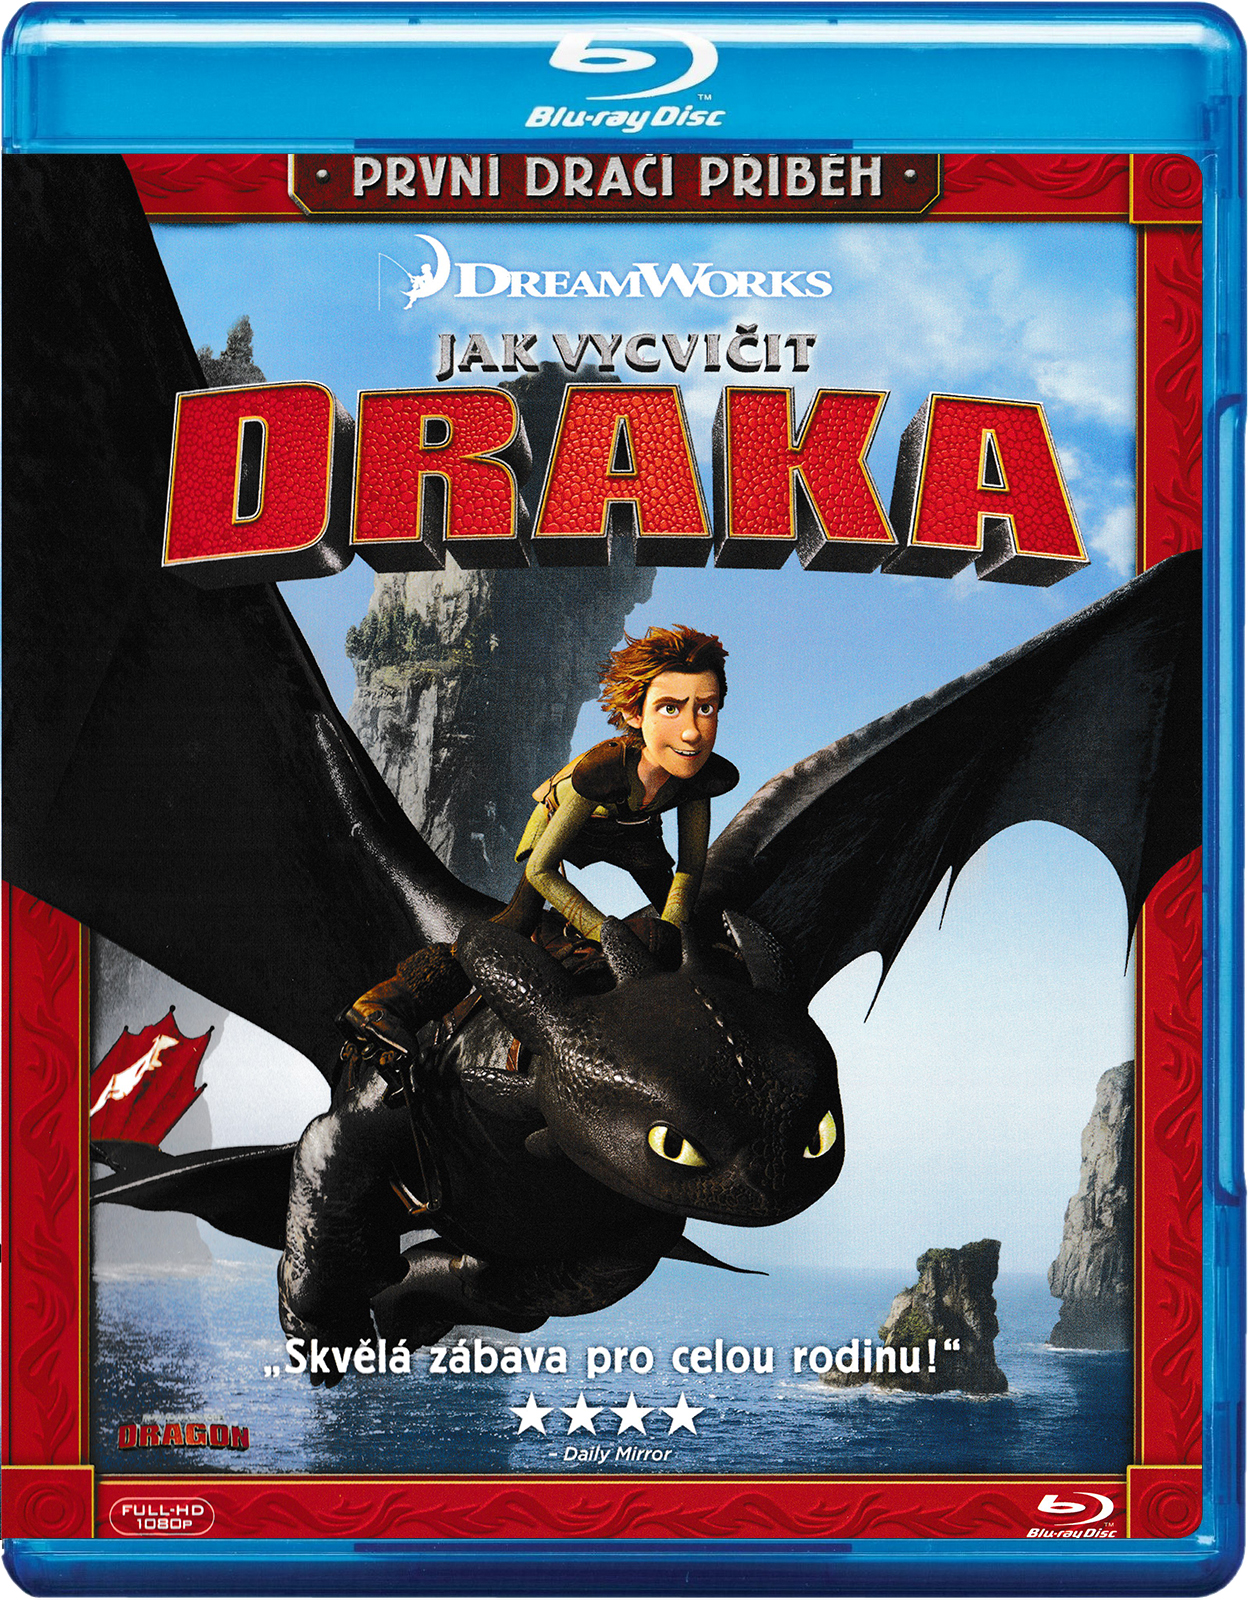 Stiahni si Filmy Kreslené Jak vycvicit draka / How to Train Your Dragon (2010)(CZ/EN)[1080HD] = CSFD 86%